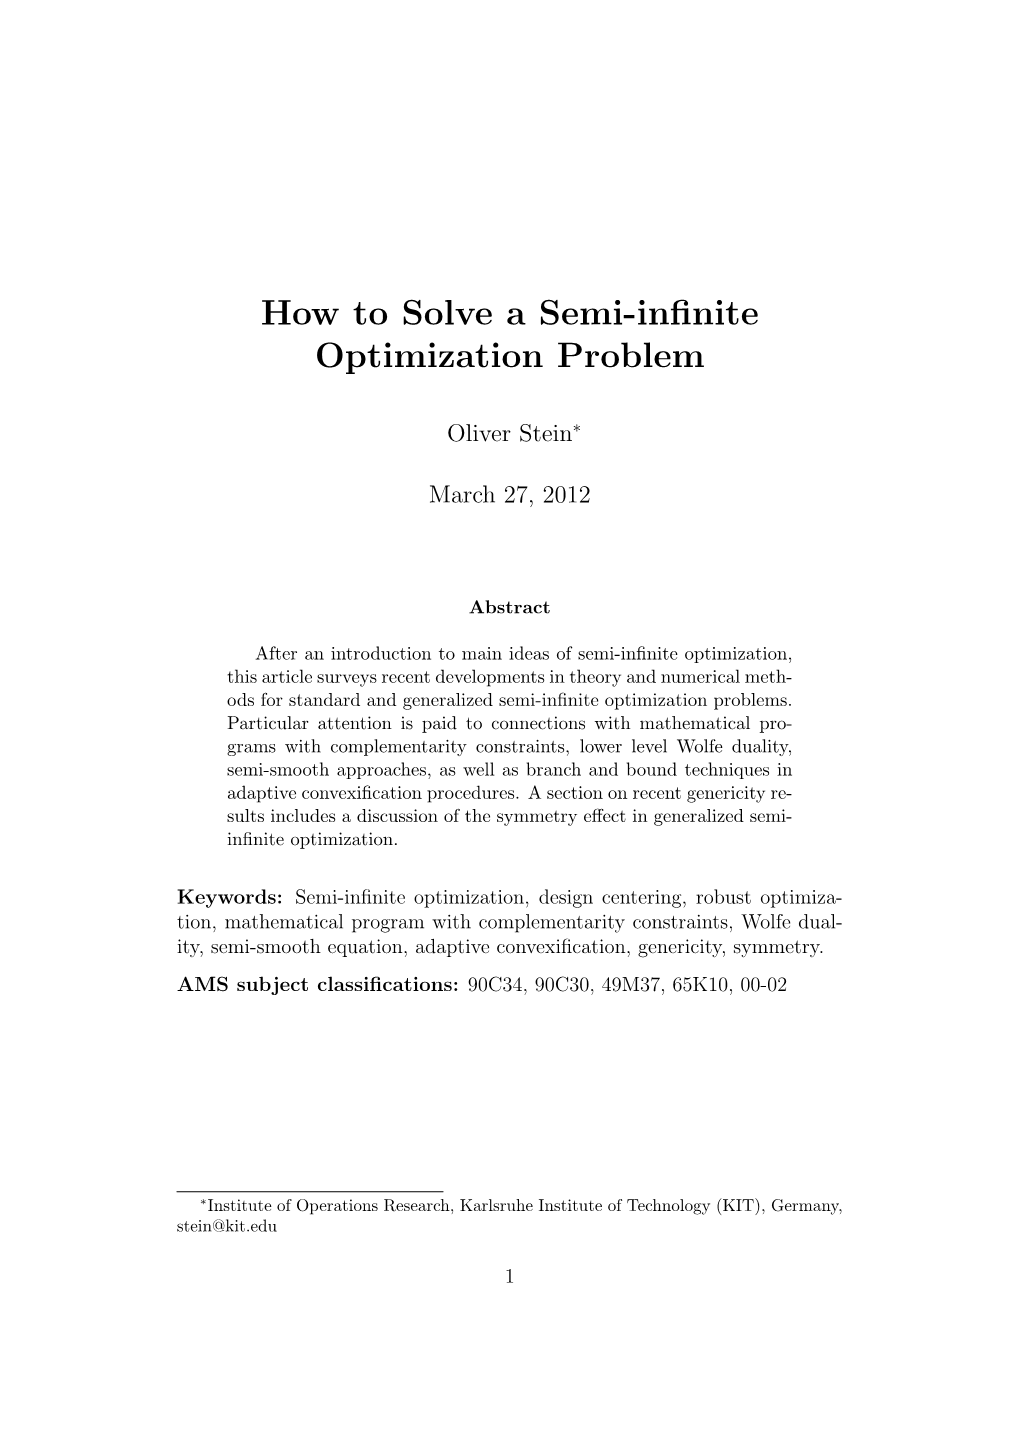 How to Solve a Semi-Infinite Optimization Problem